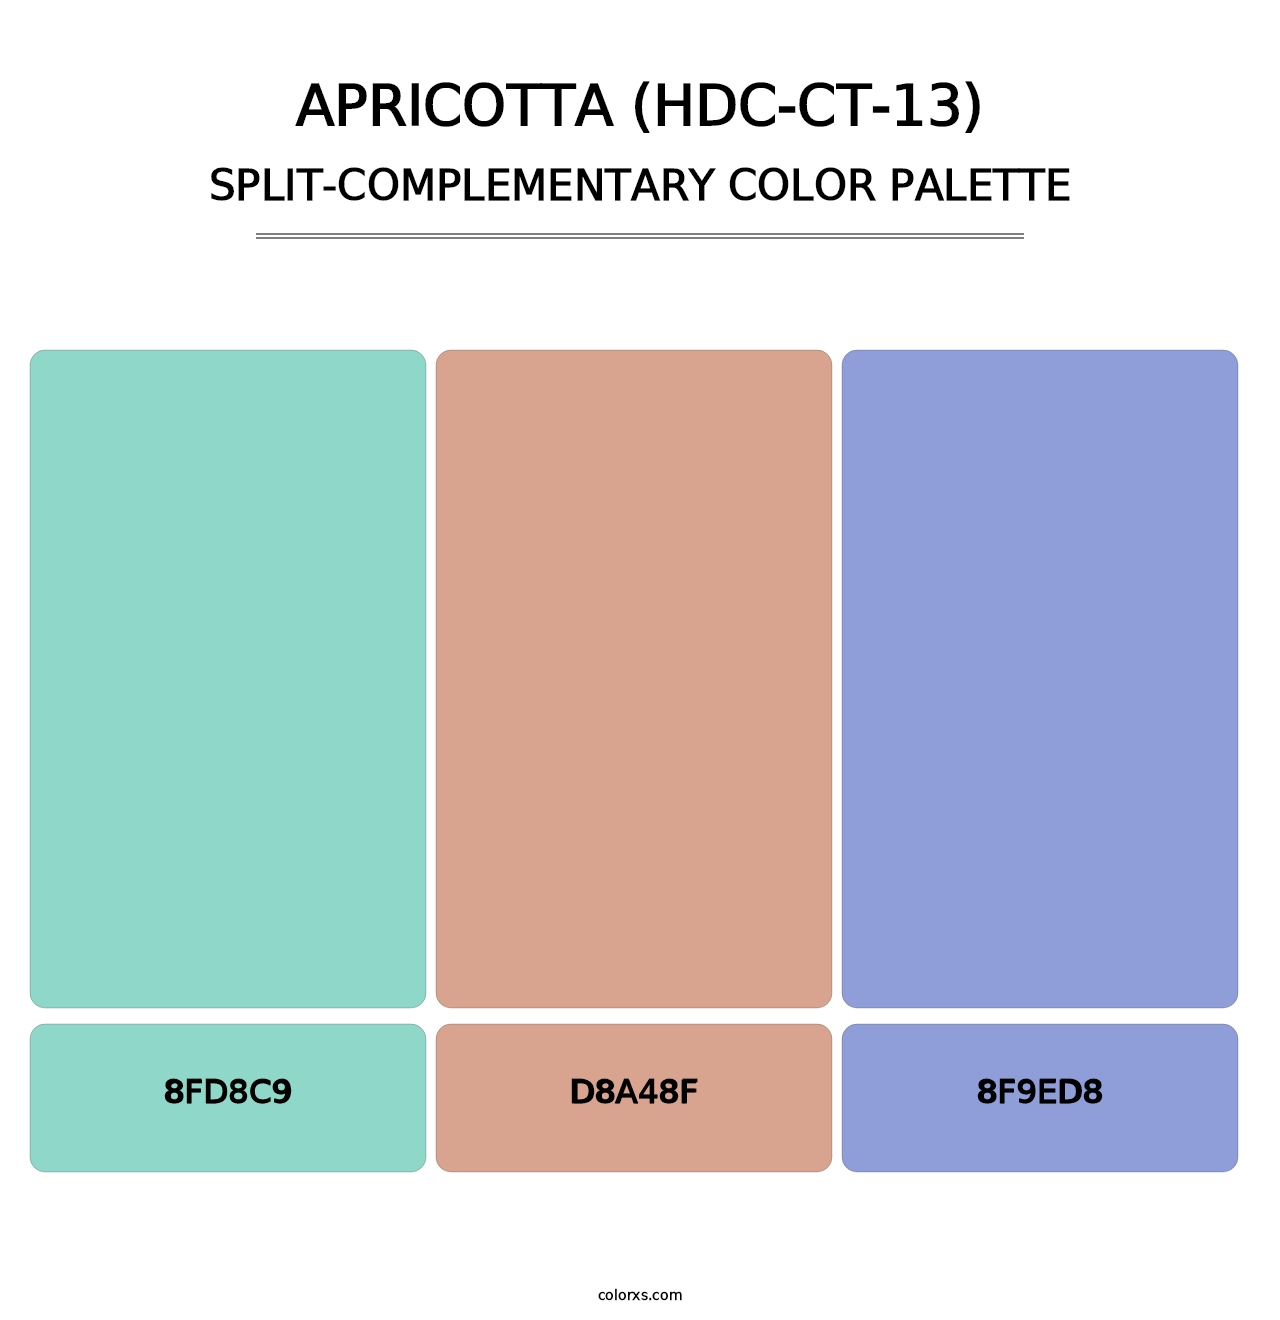 Apricotta (HDC-CT-13) - Split-Complementary Color Palette